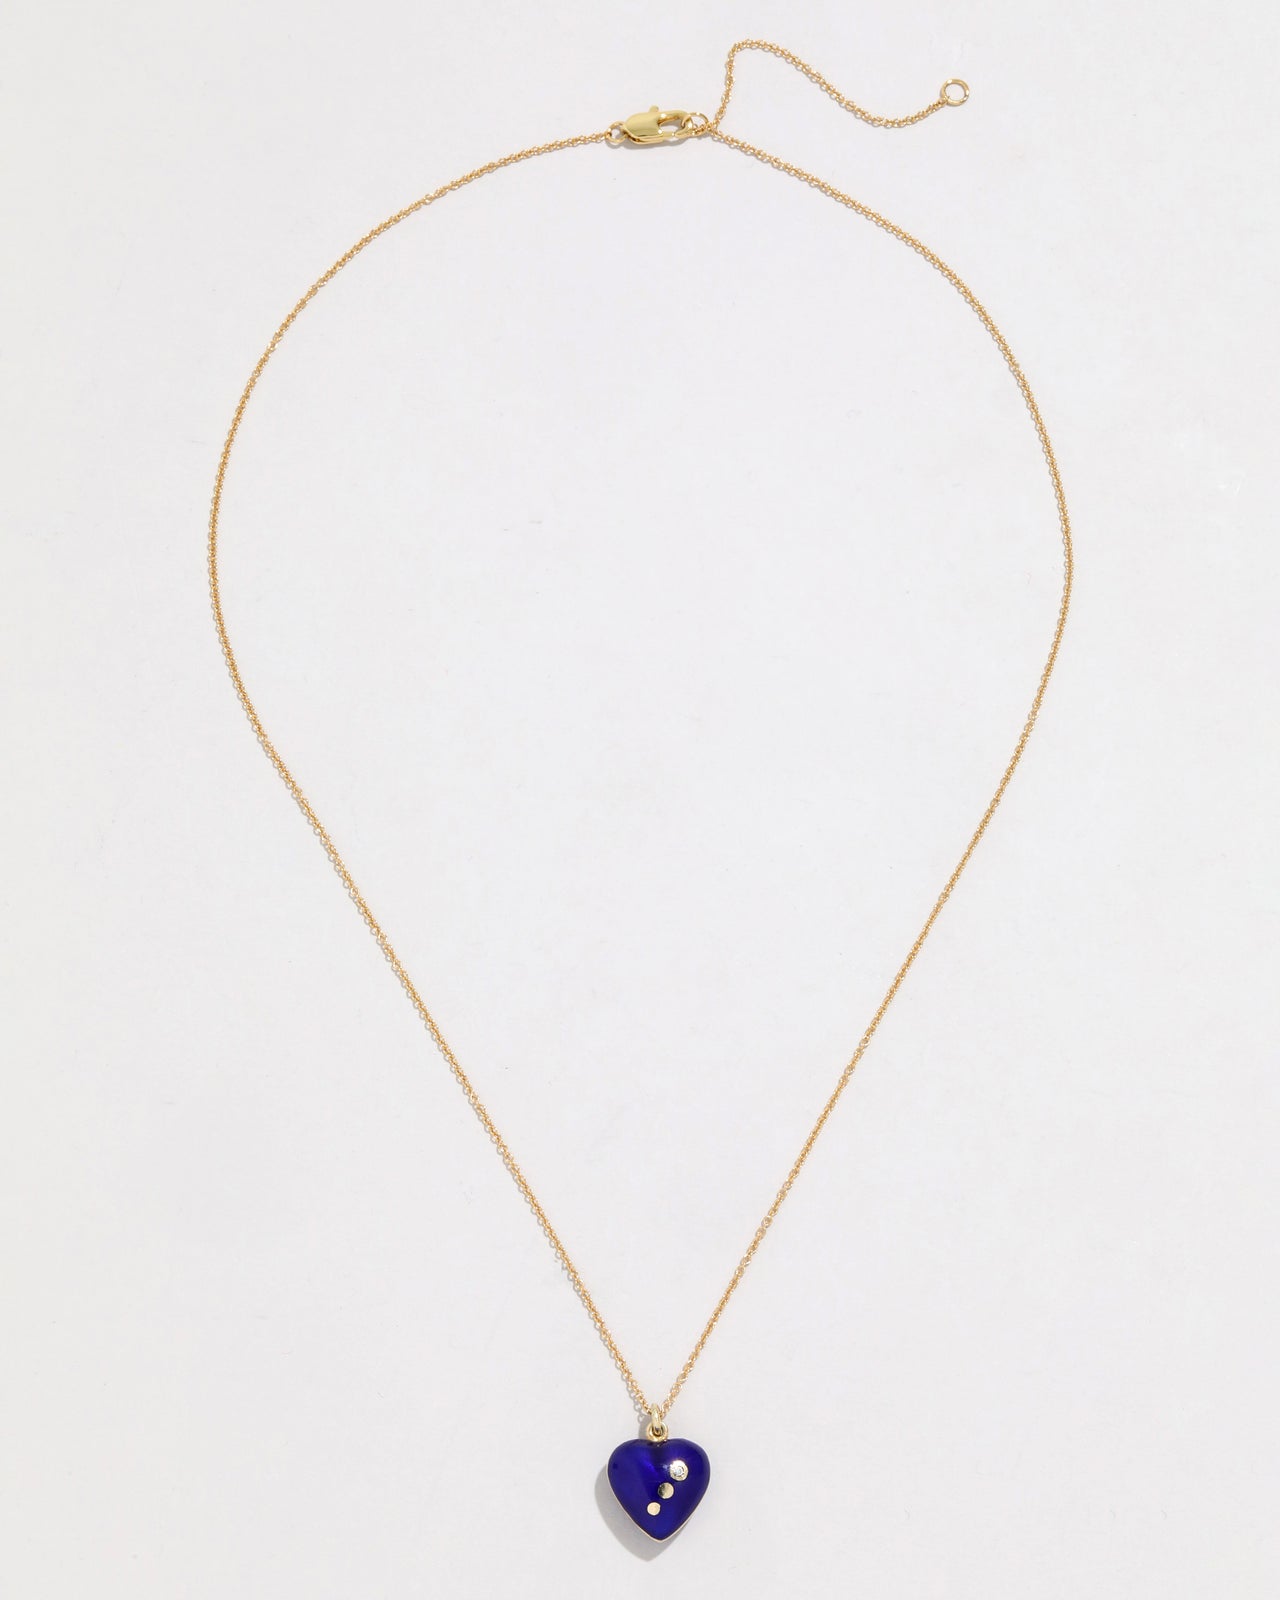 Vintage 1970s 14k Gold and Blue Enamel Heart Pendant Necklace - Photo 2